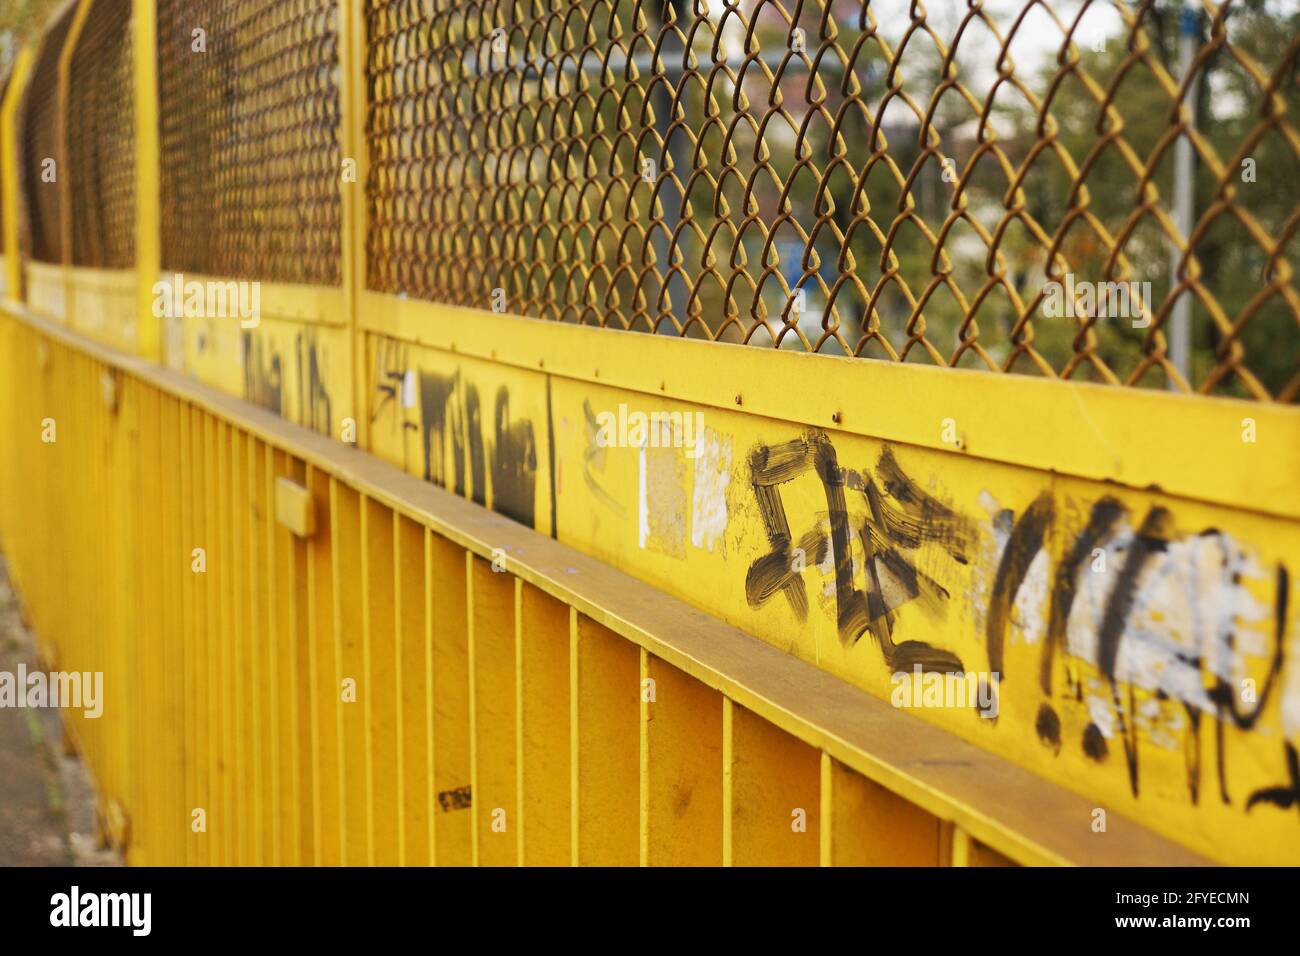 POZNAN, POLAND - Nov 01, 2012: A yellow metal fence with some sprayed words Stock Photo